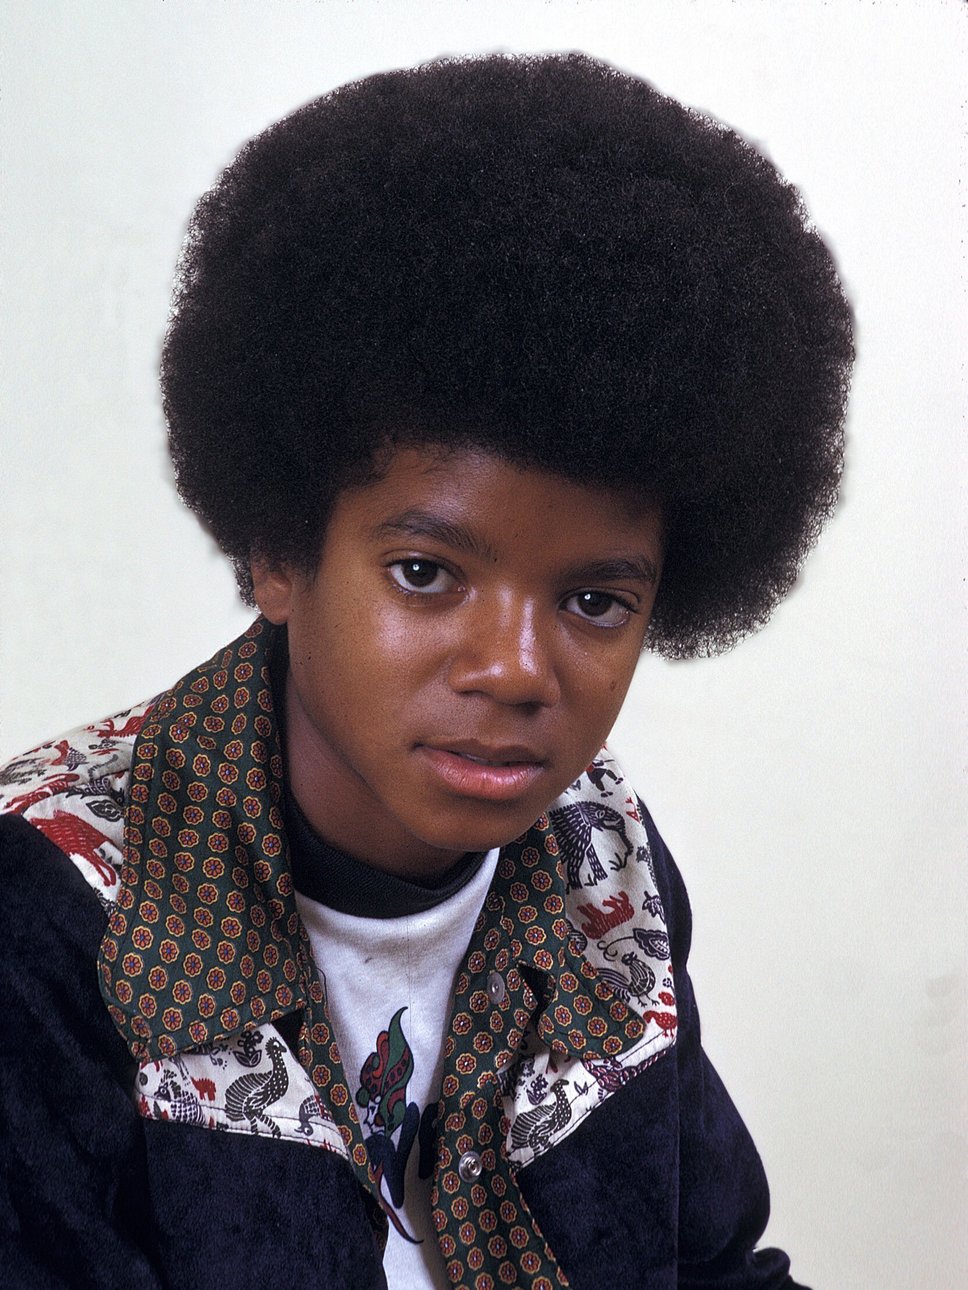 Michael Jackson #2